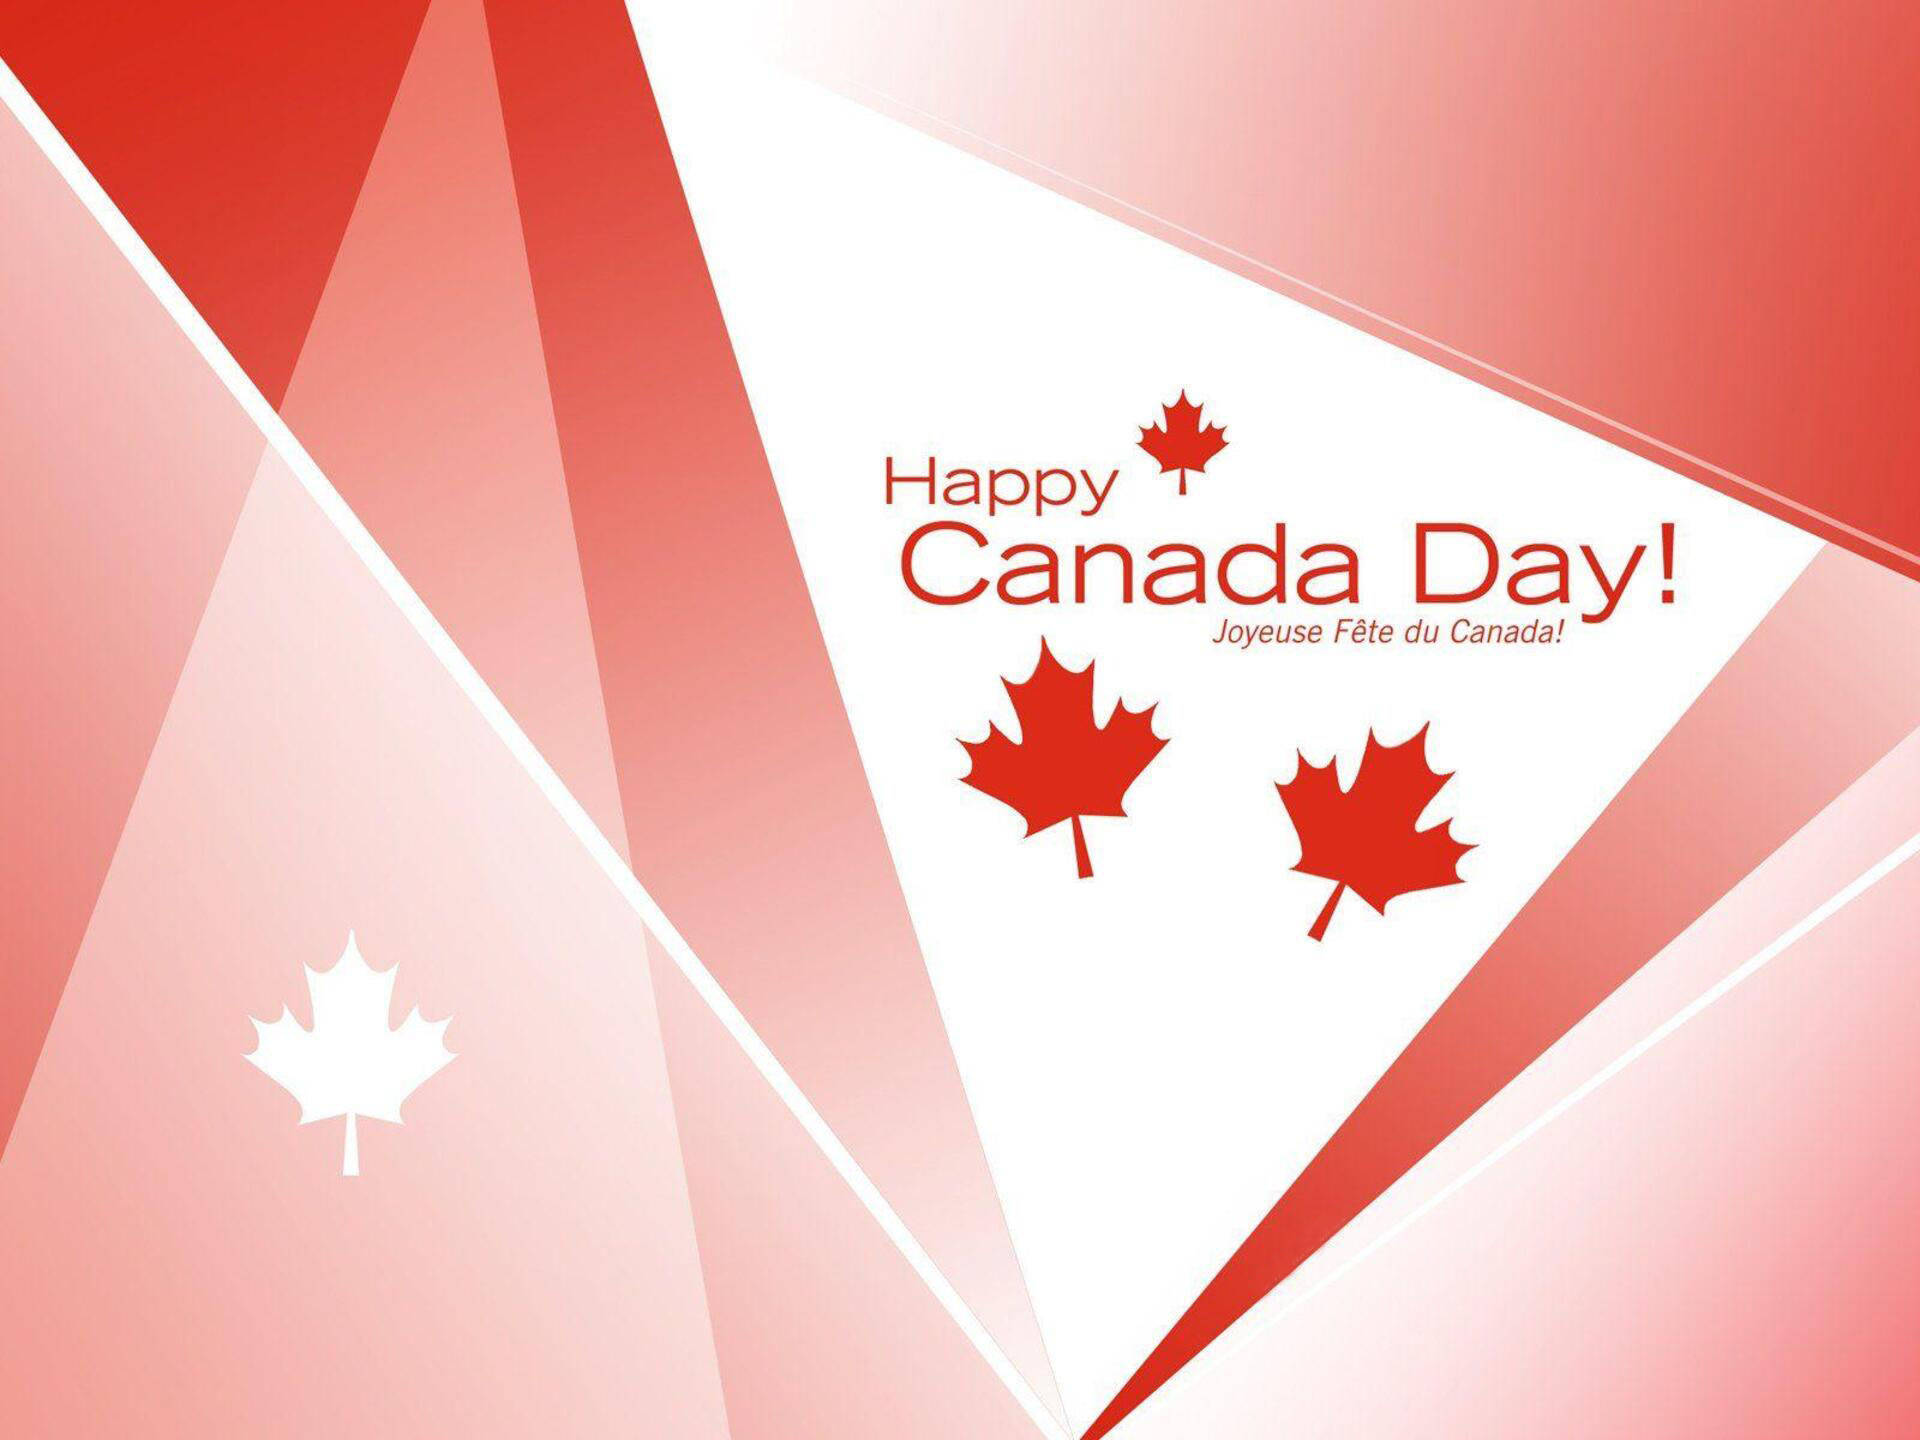 Happy Canada Day Illustration Wallpaper